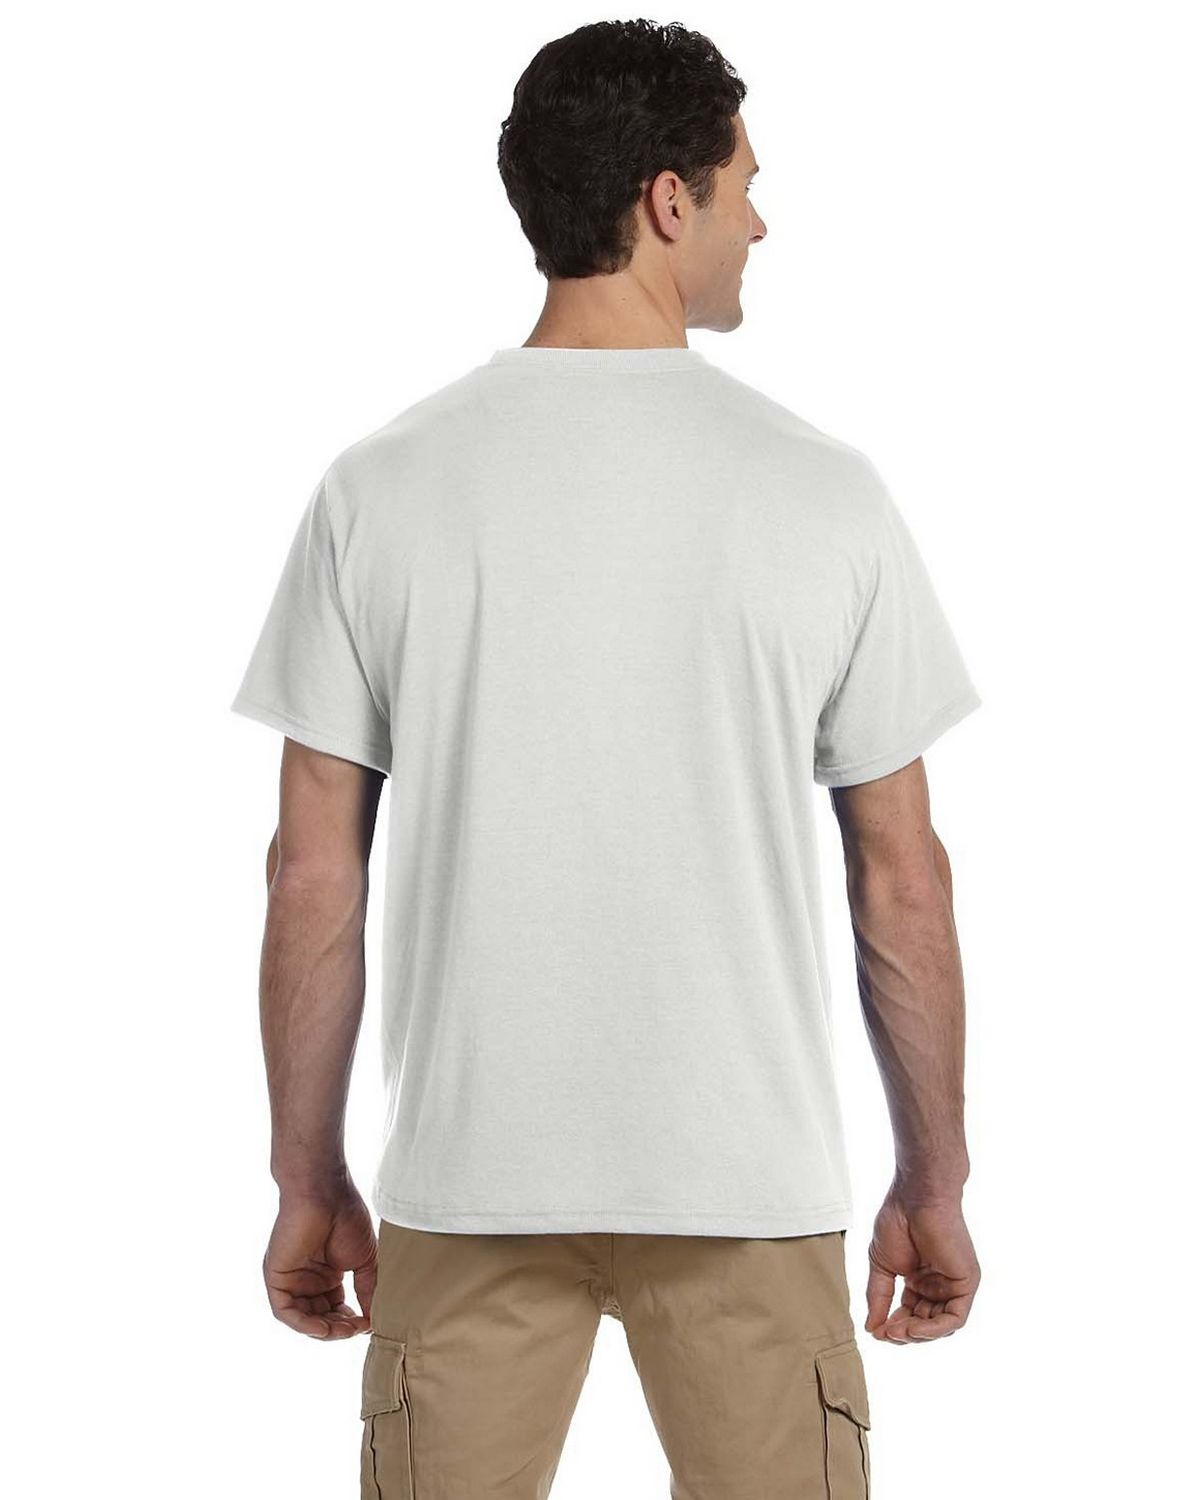 Size Chart for Jerzees 21M 5.8 oz. Move Moisture Management T-Shirt